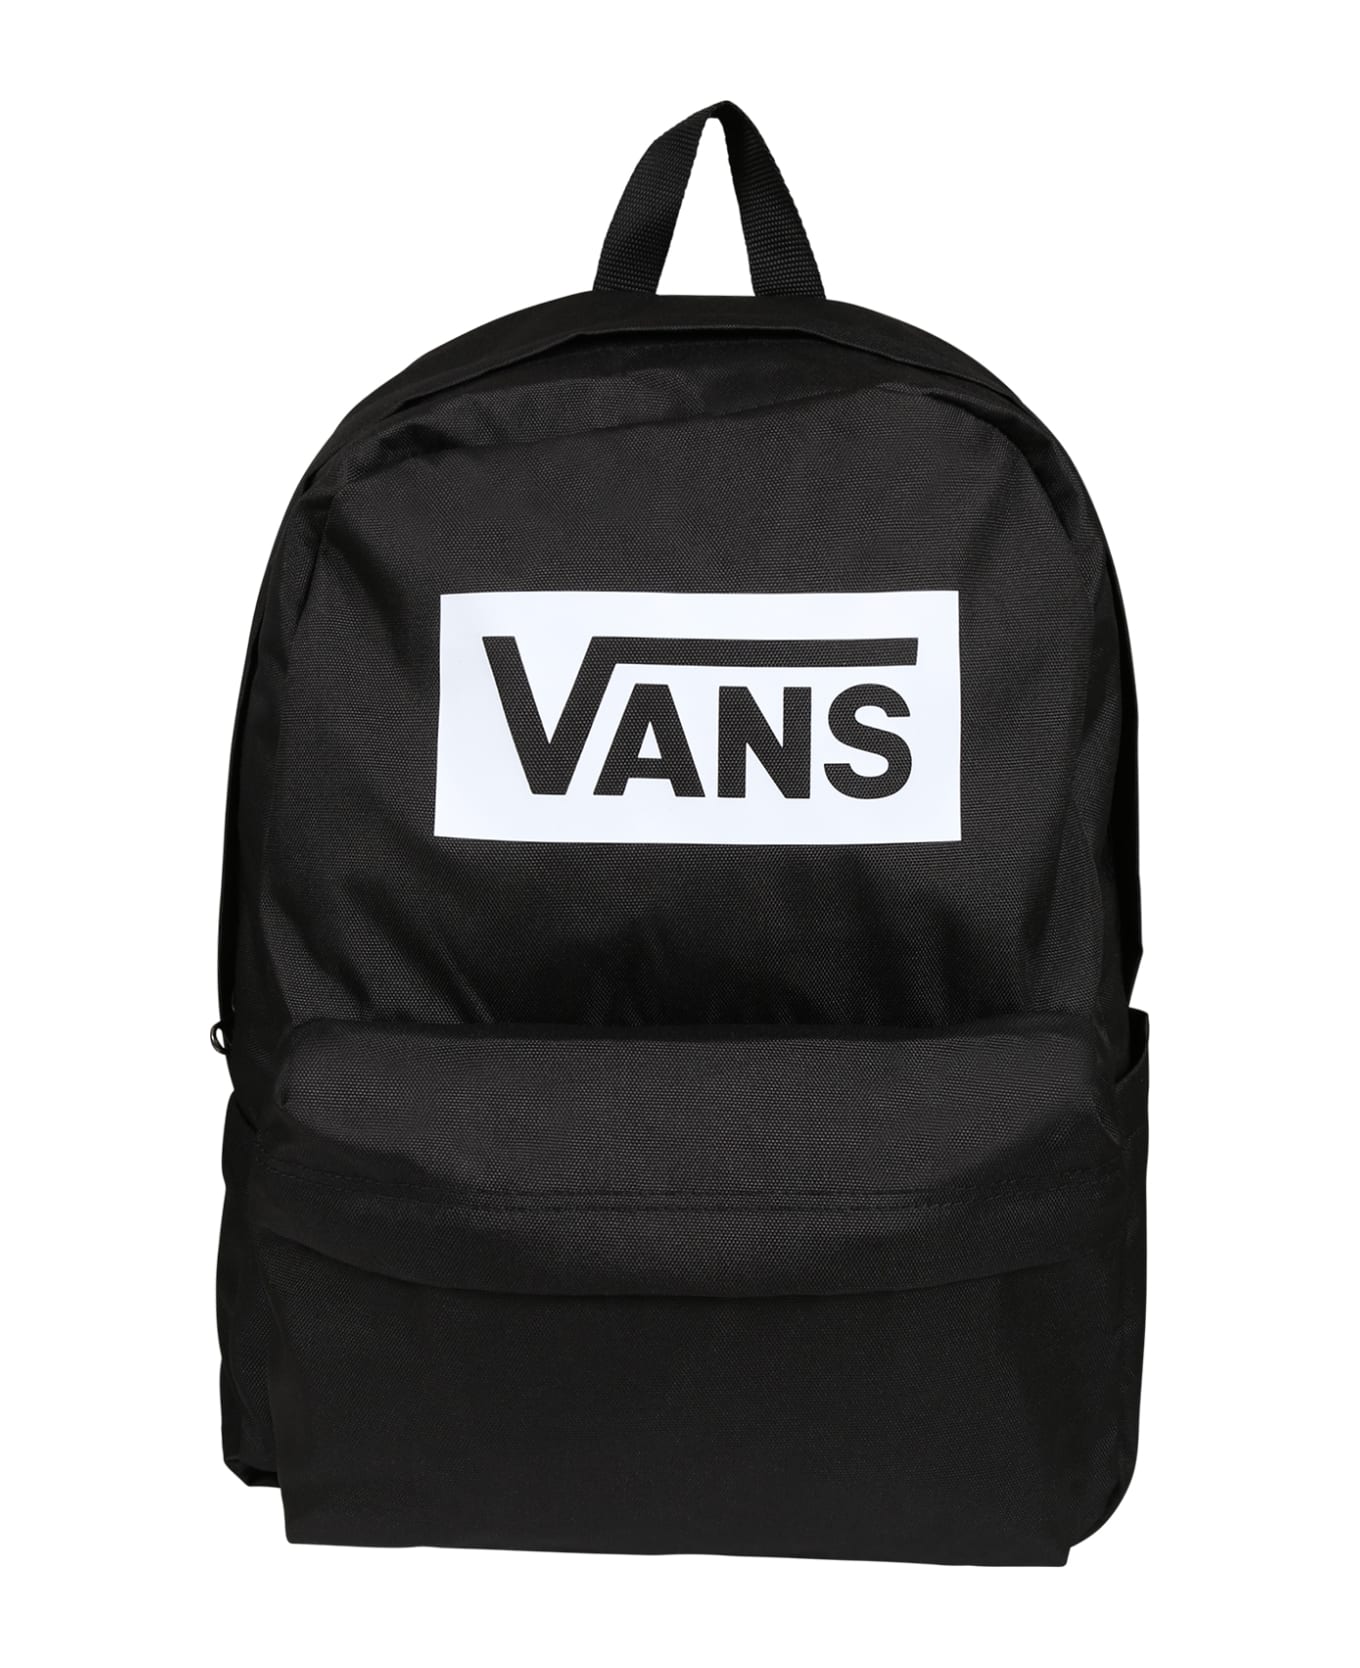 Vans Black Backpack For Kids With Iconic White Logo - Black